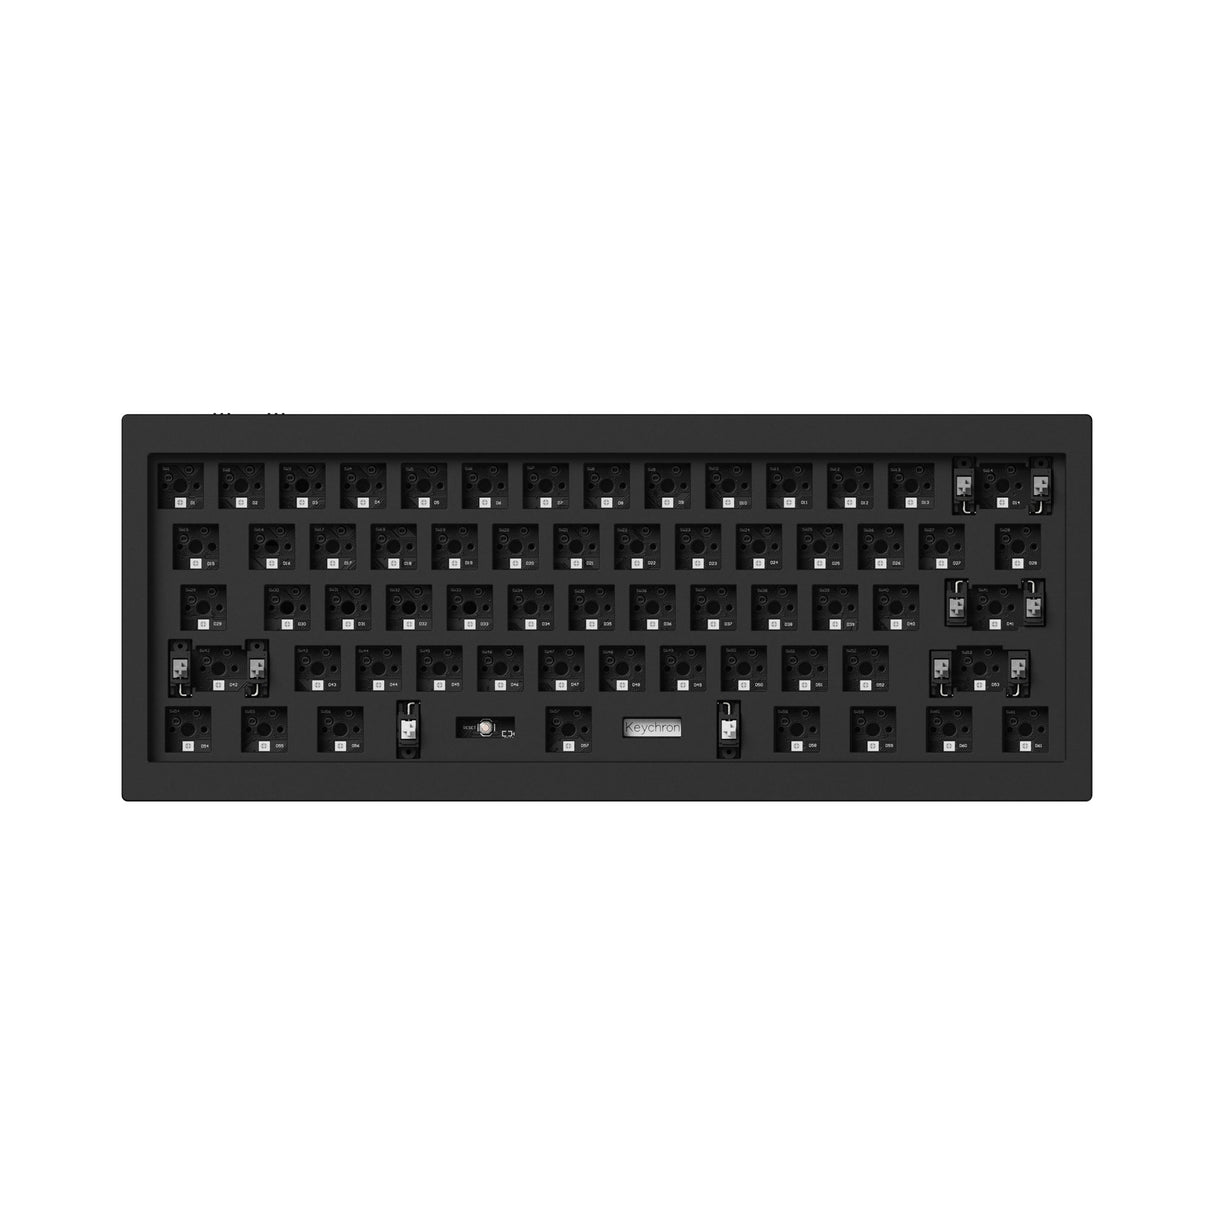 Keychron Q4 Pro QMK/VIA wireless custom mechanical keyboard 60 percent layout full aluminum black frame for Mac WIndows Linux with RGB backlight and hot-swappable barebone